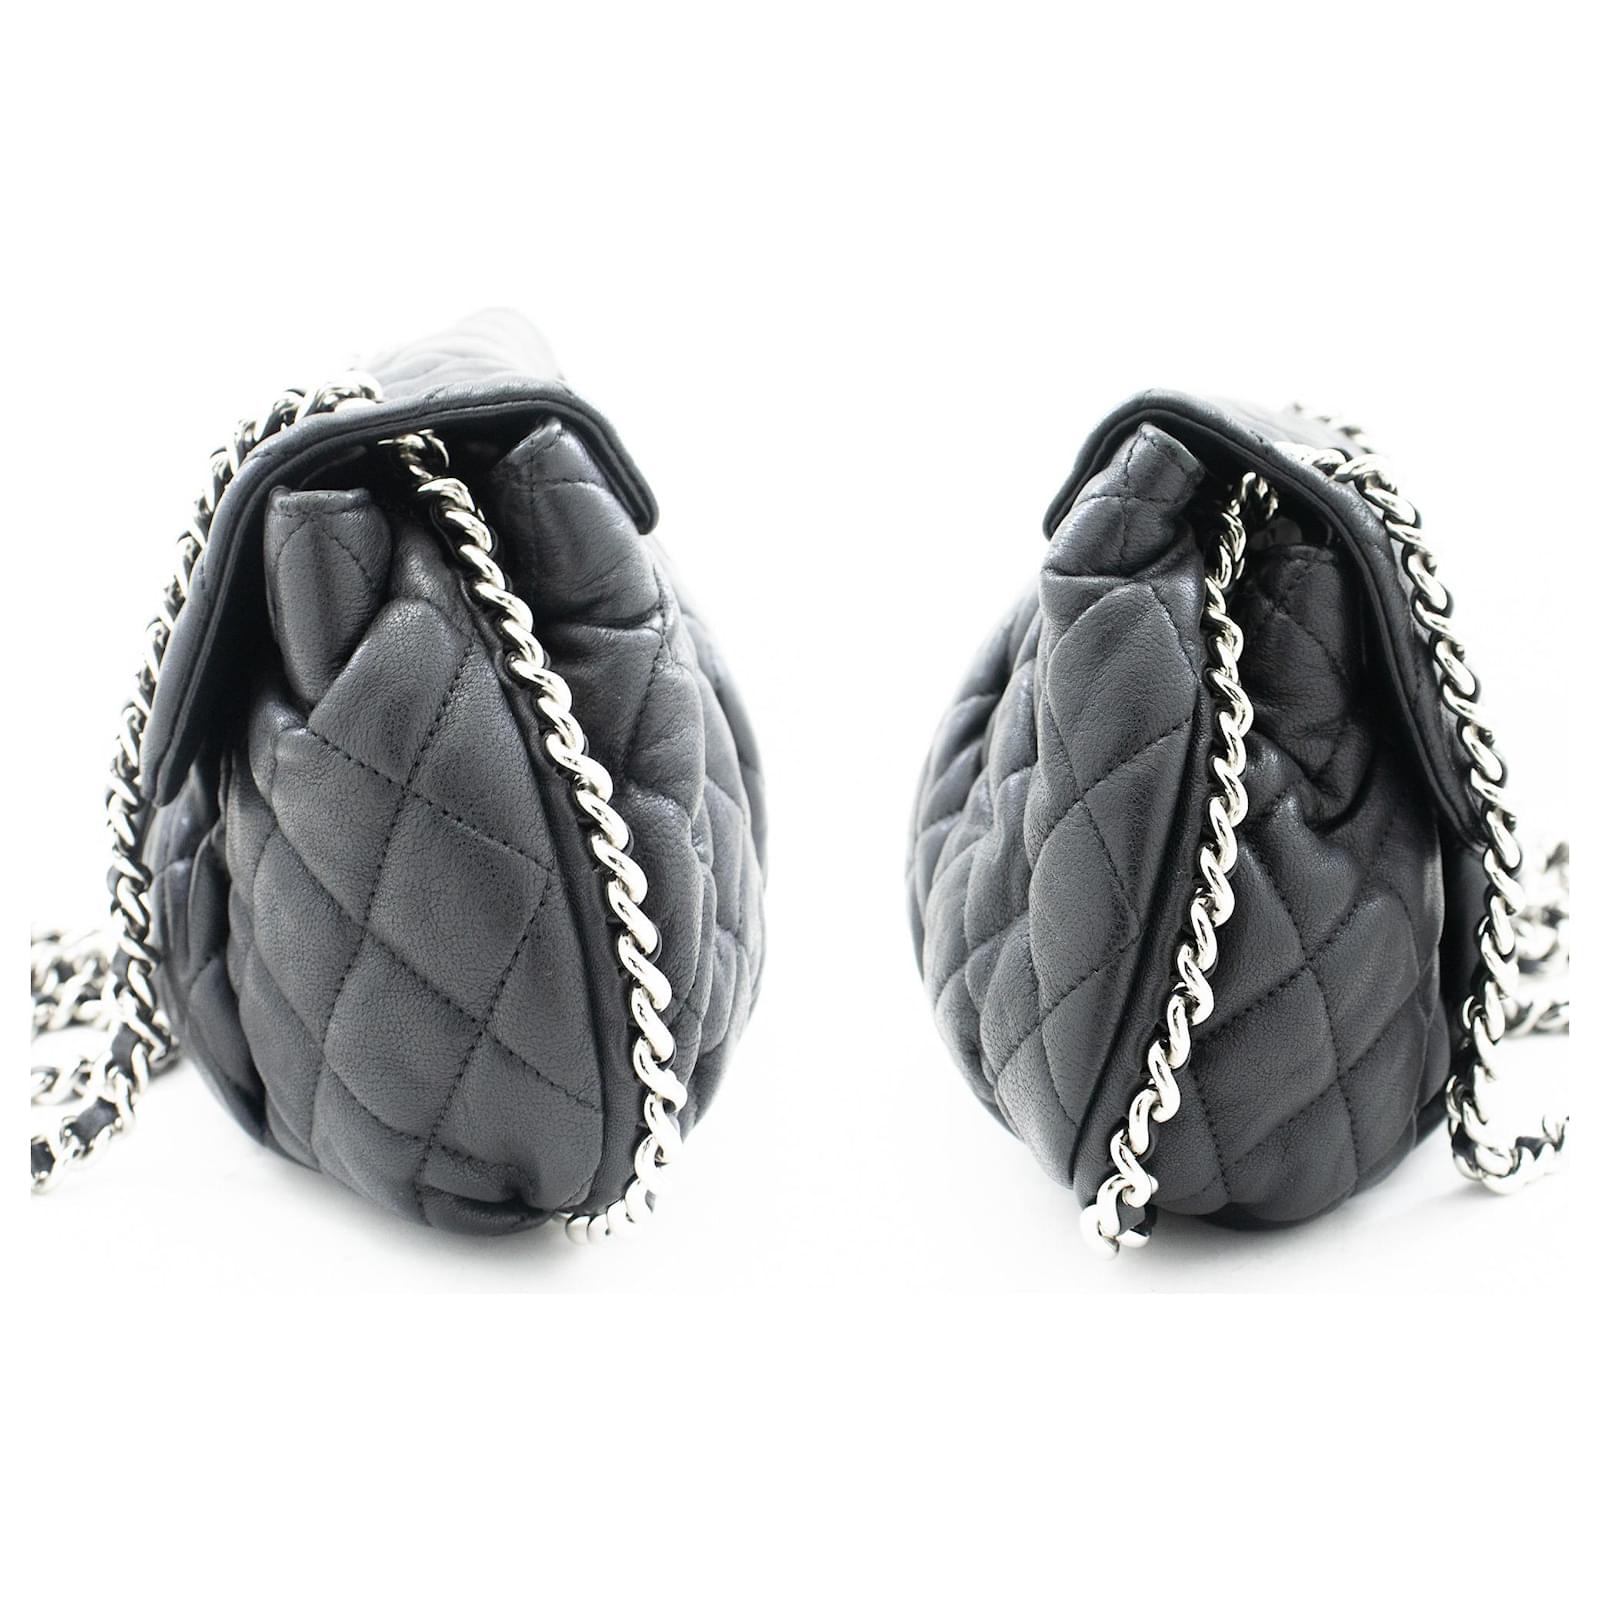 Handbags Chanel Chanel Chain Around Shoulder Bag Crossbody Black Calf Leather Leather